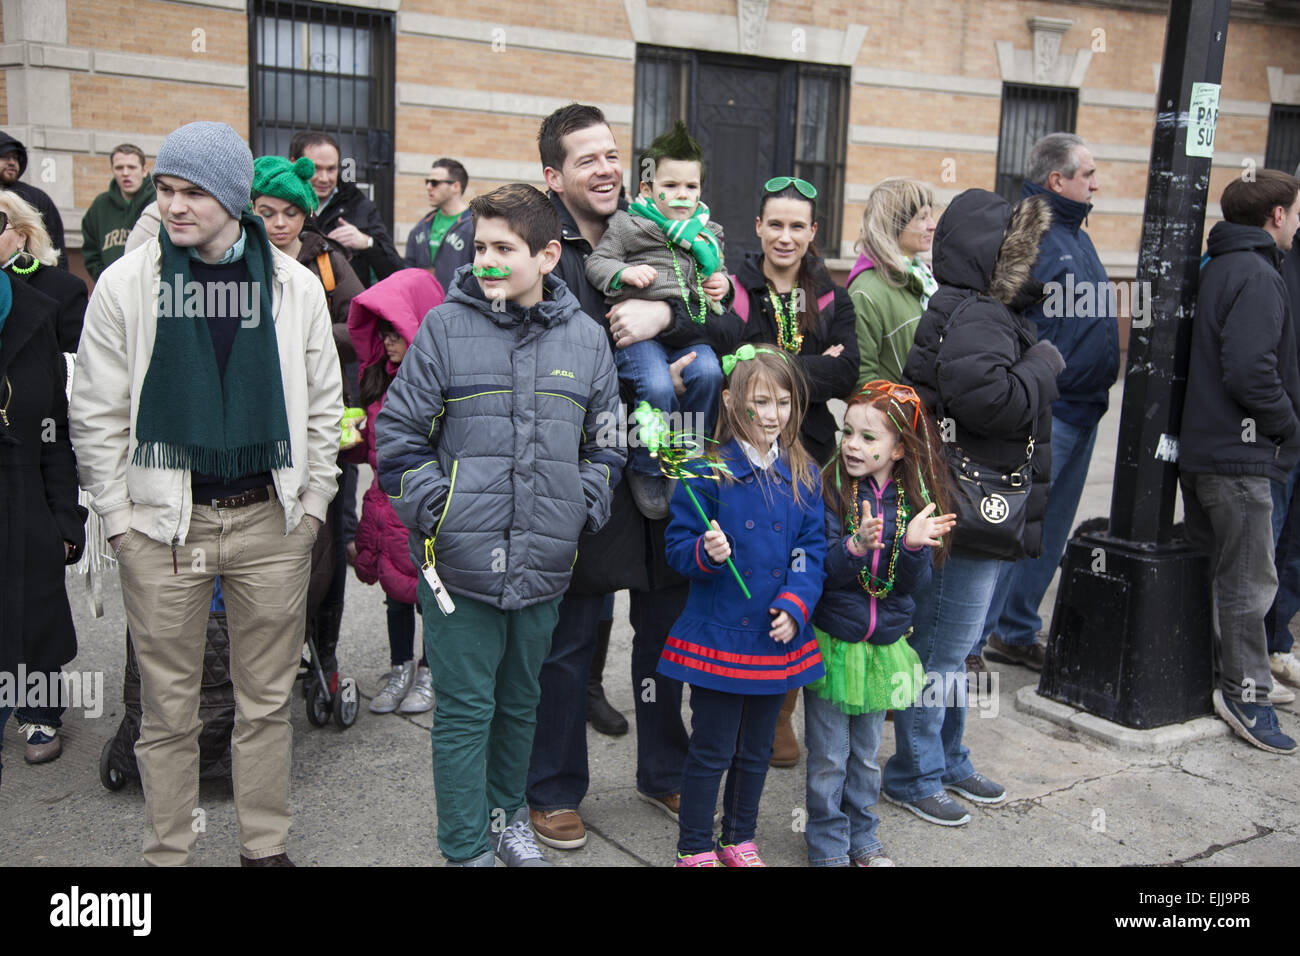 Everybody's Irish on St. Patrick's Day. Spectators watch the parade in Park Slope, Brooklyn, NY. Stock Photo